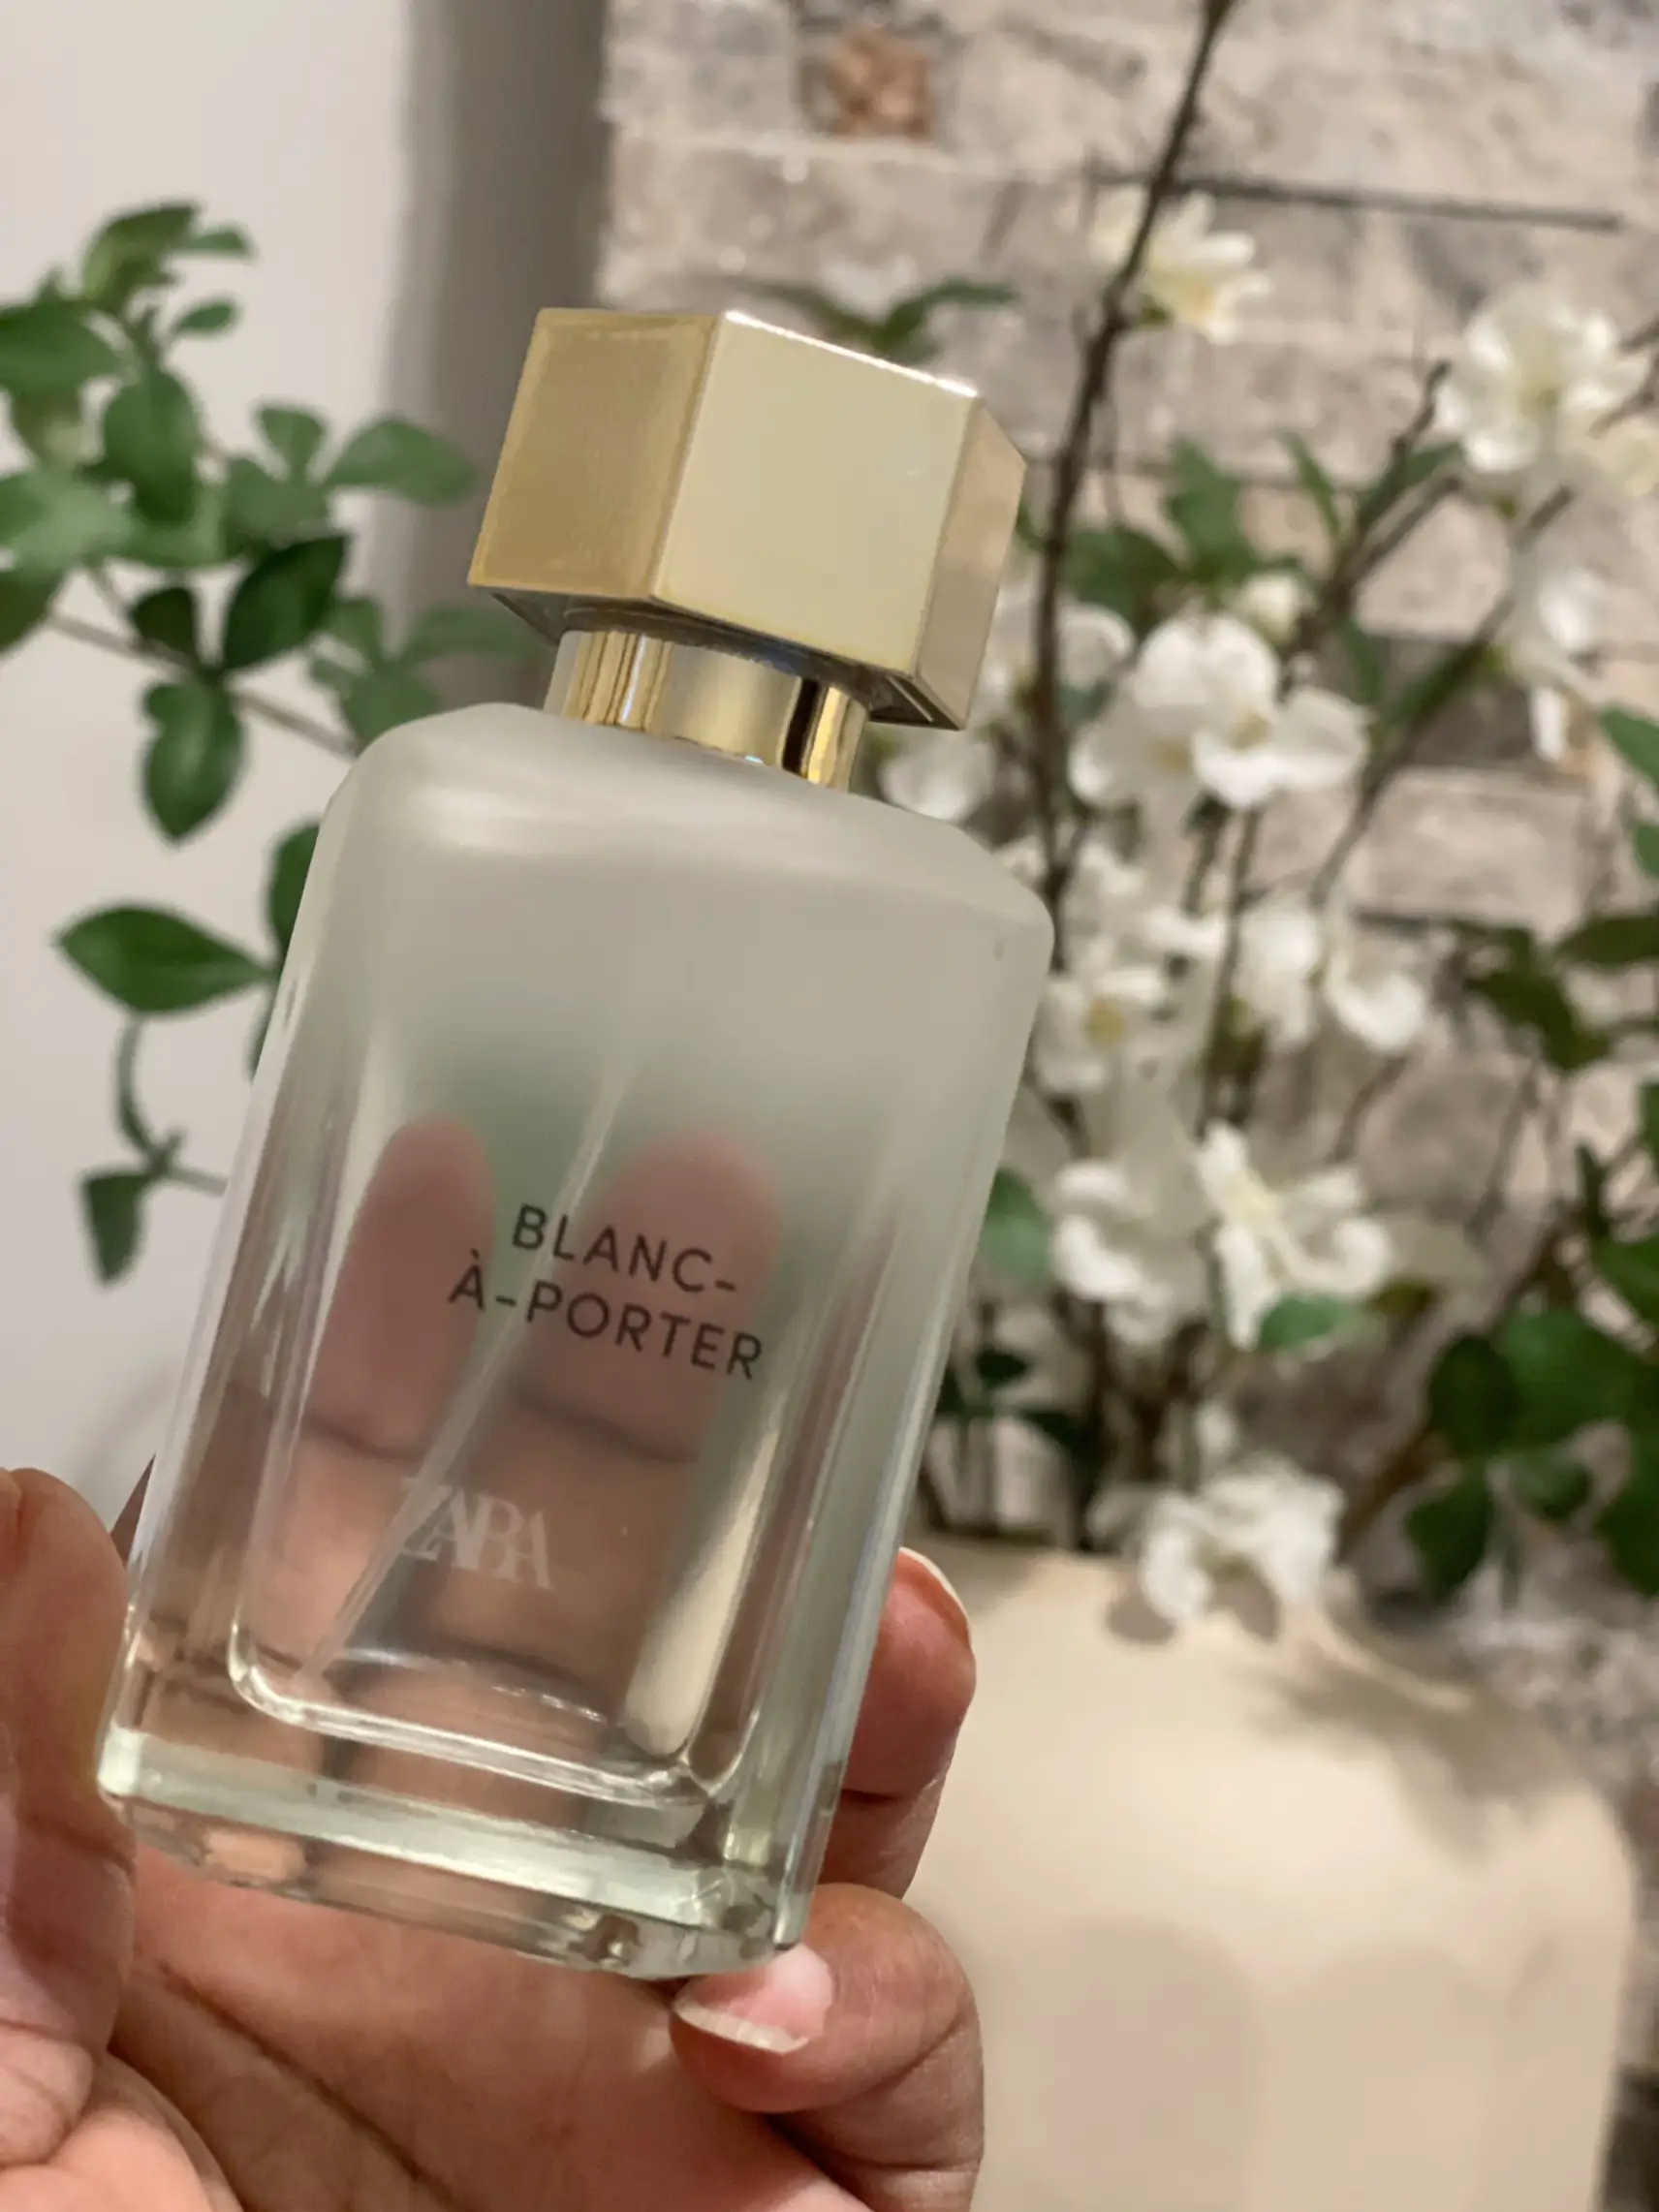 Blanc-à-Porter (Layering Enhancer Fragrance) Zara perfume - a new